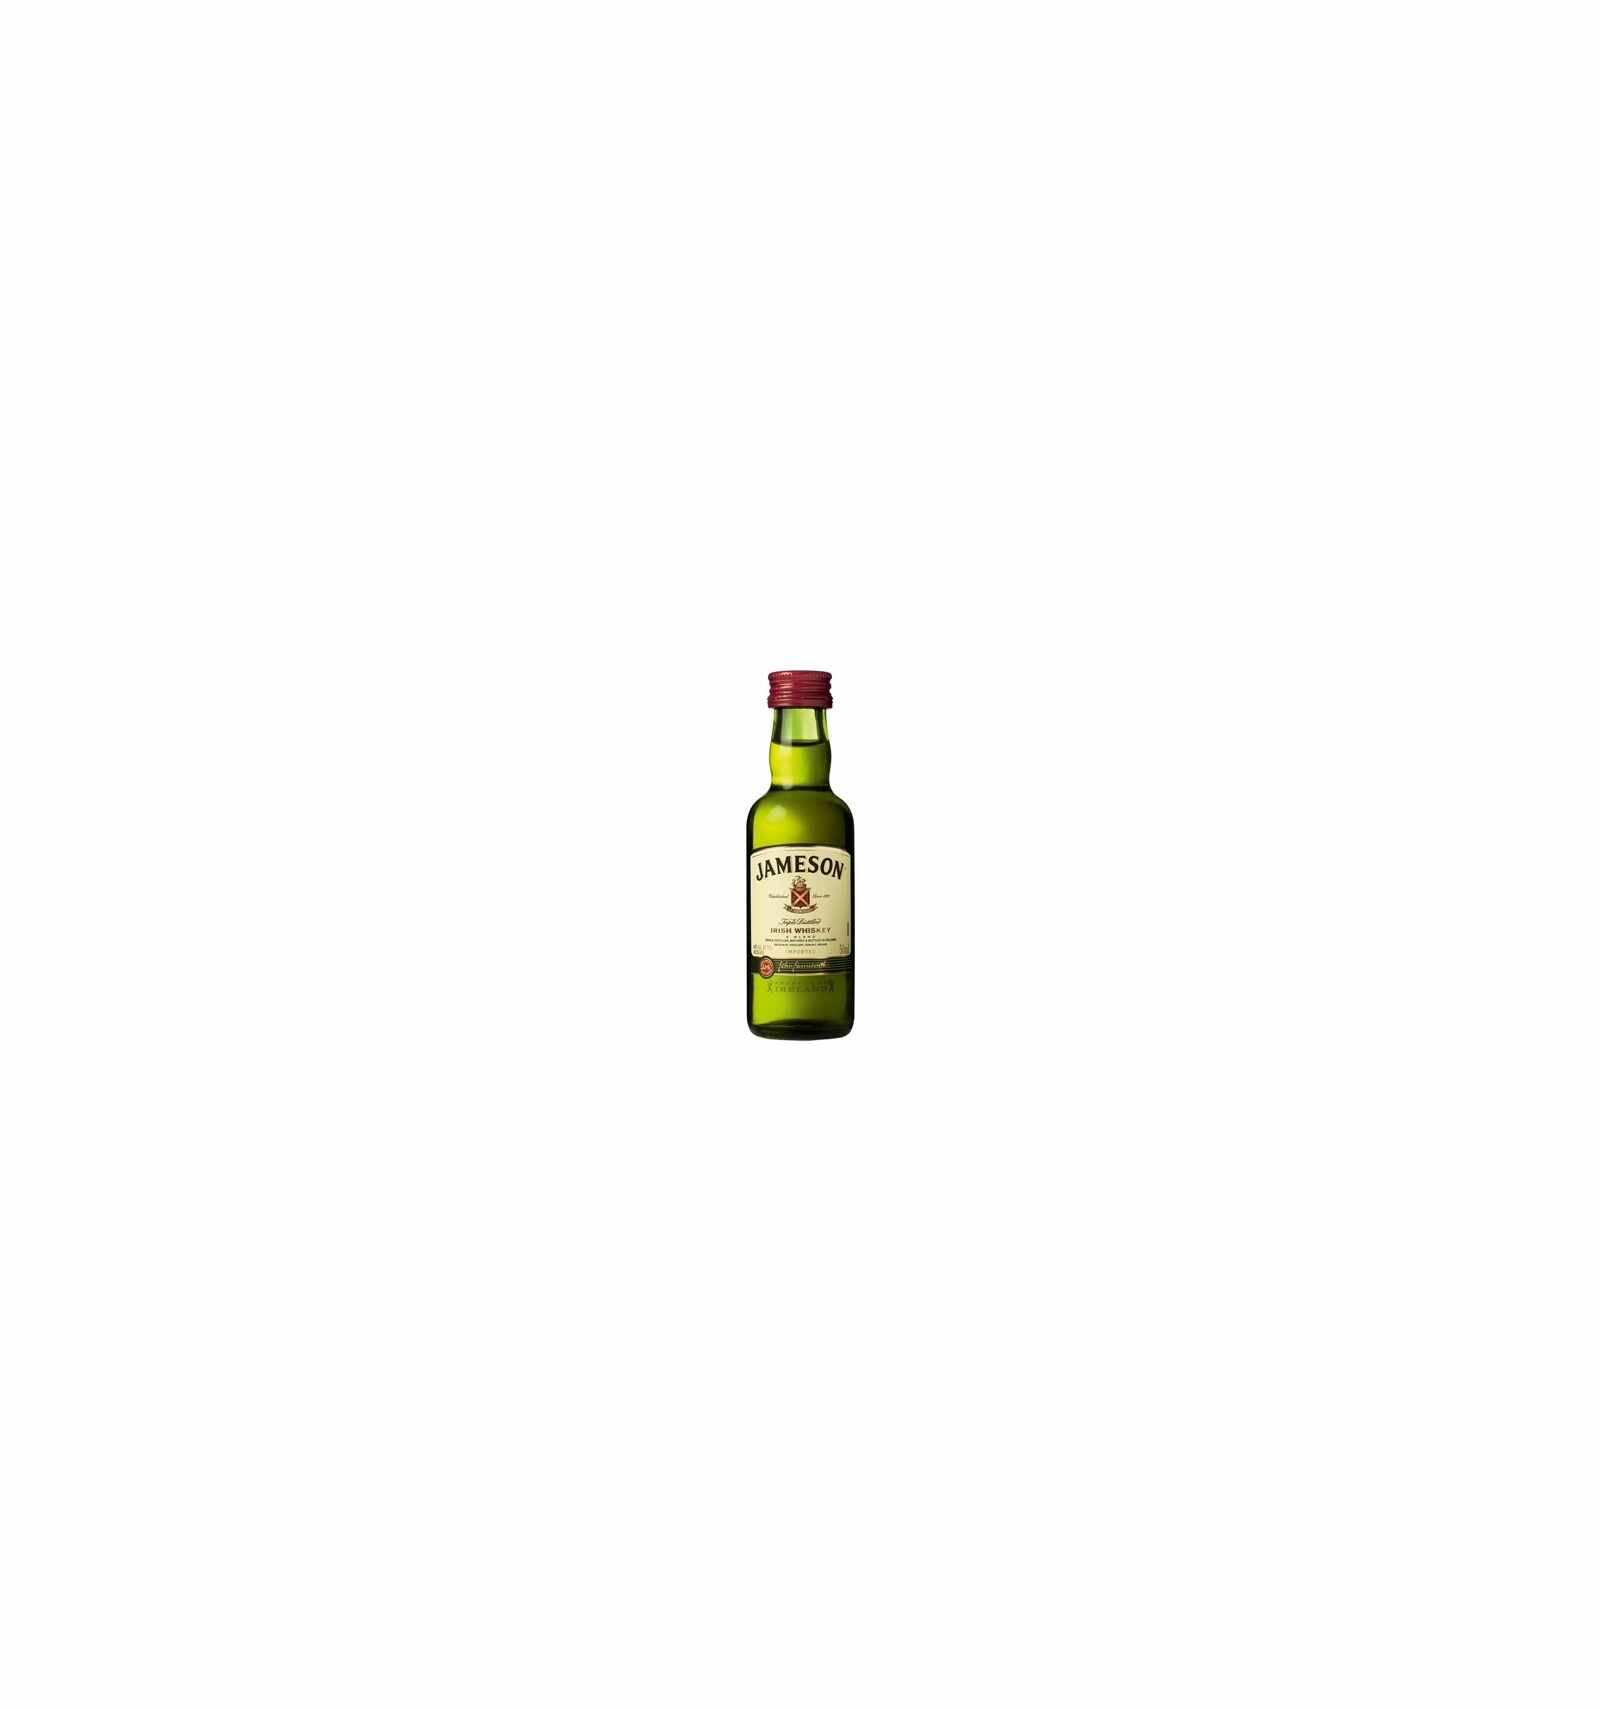 Whisky Jameson, 40% alc., 0.05L, Irlanda